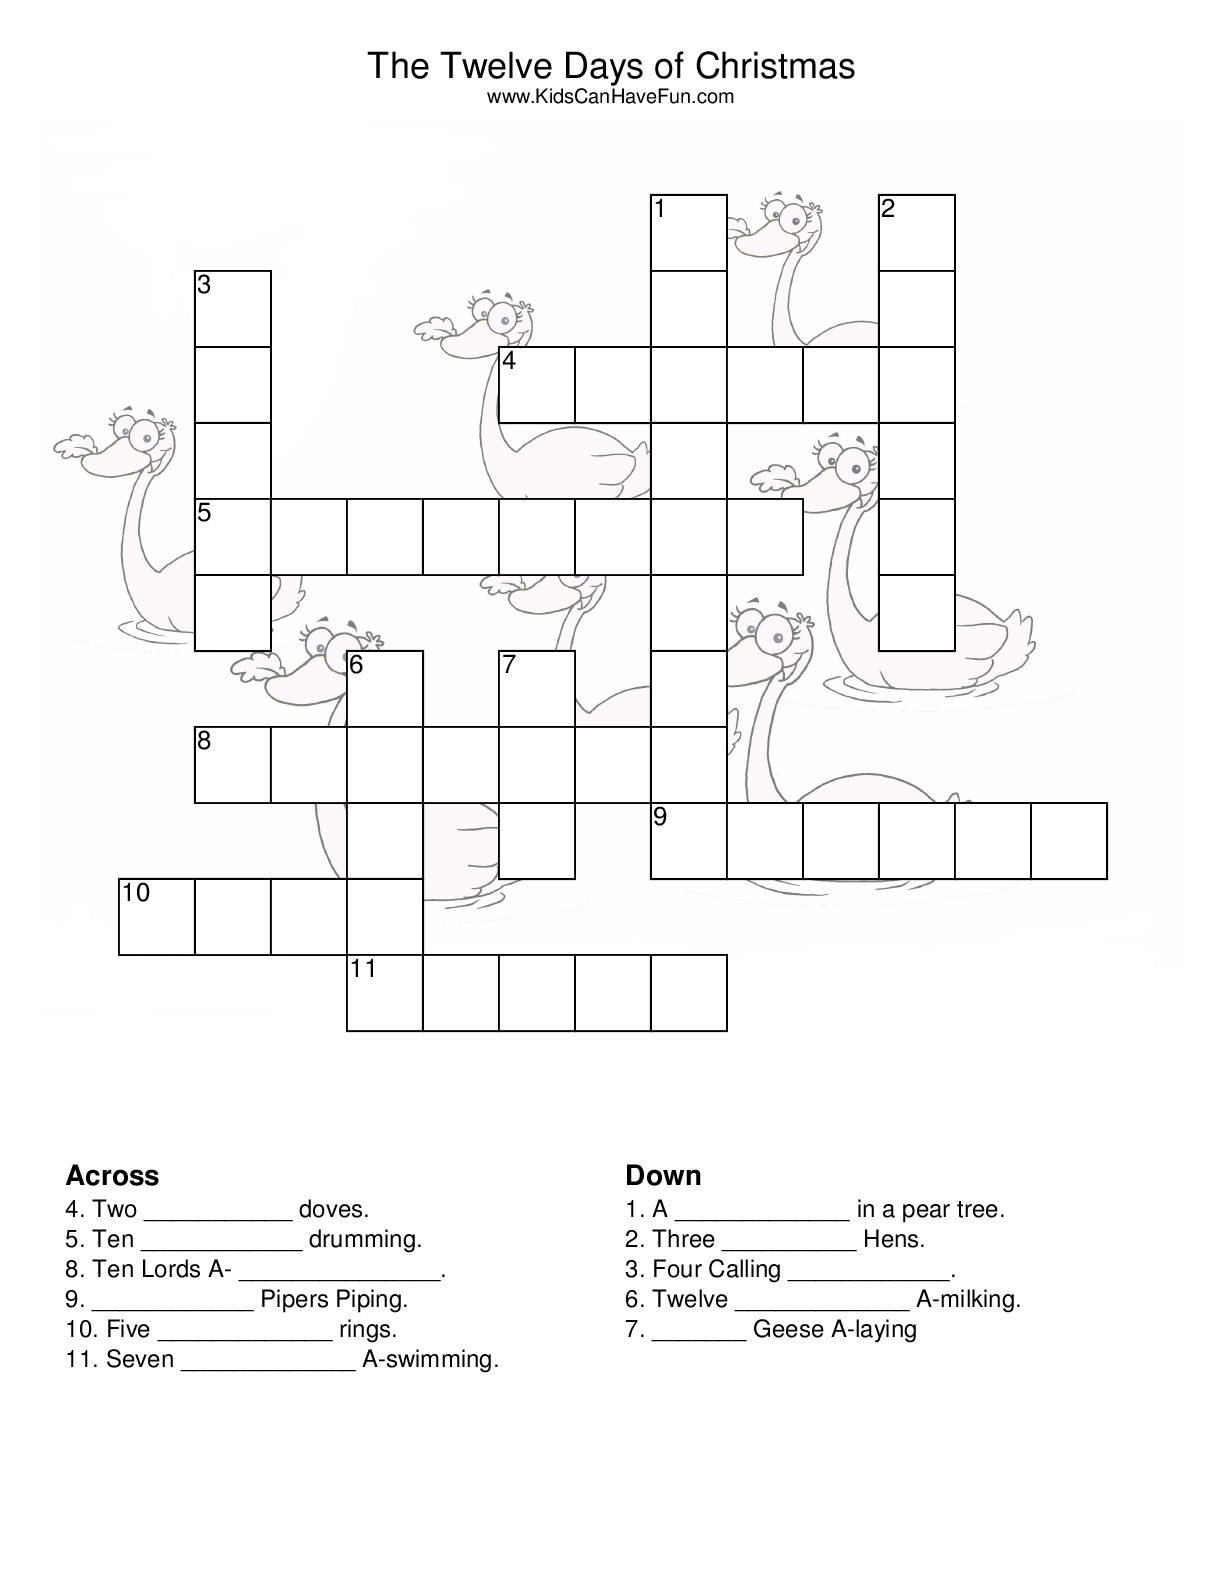 Easy Christmas Crossword Puzzles Printable